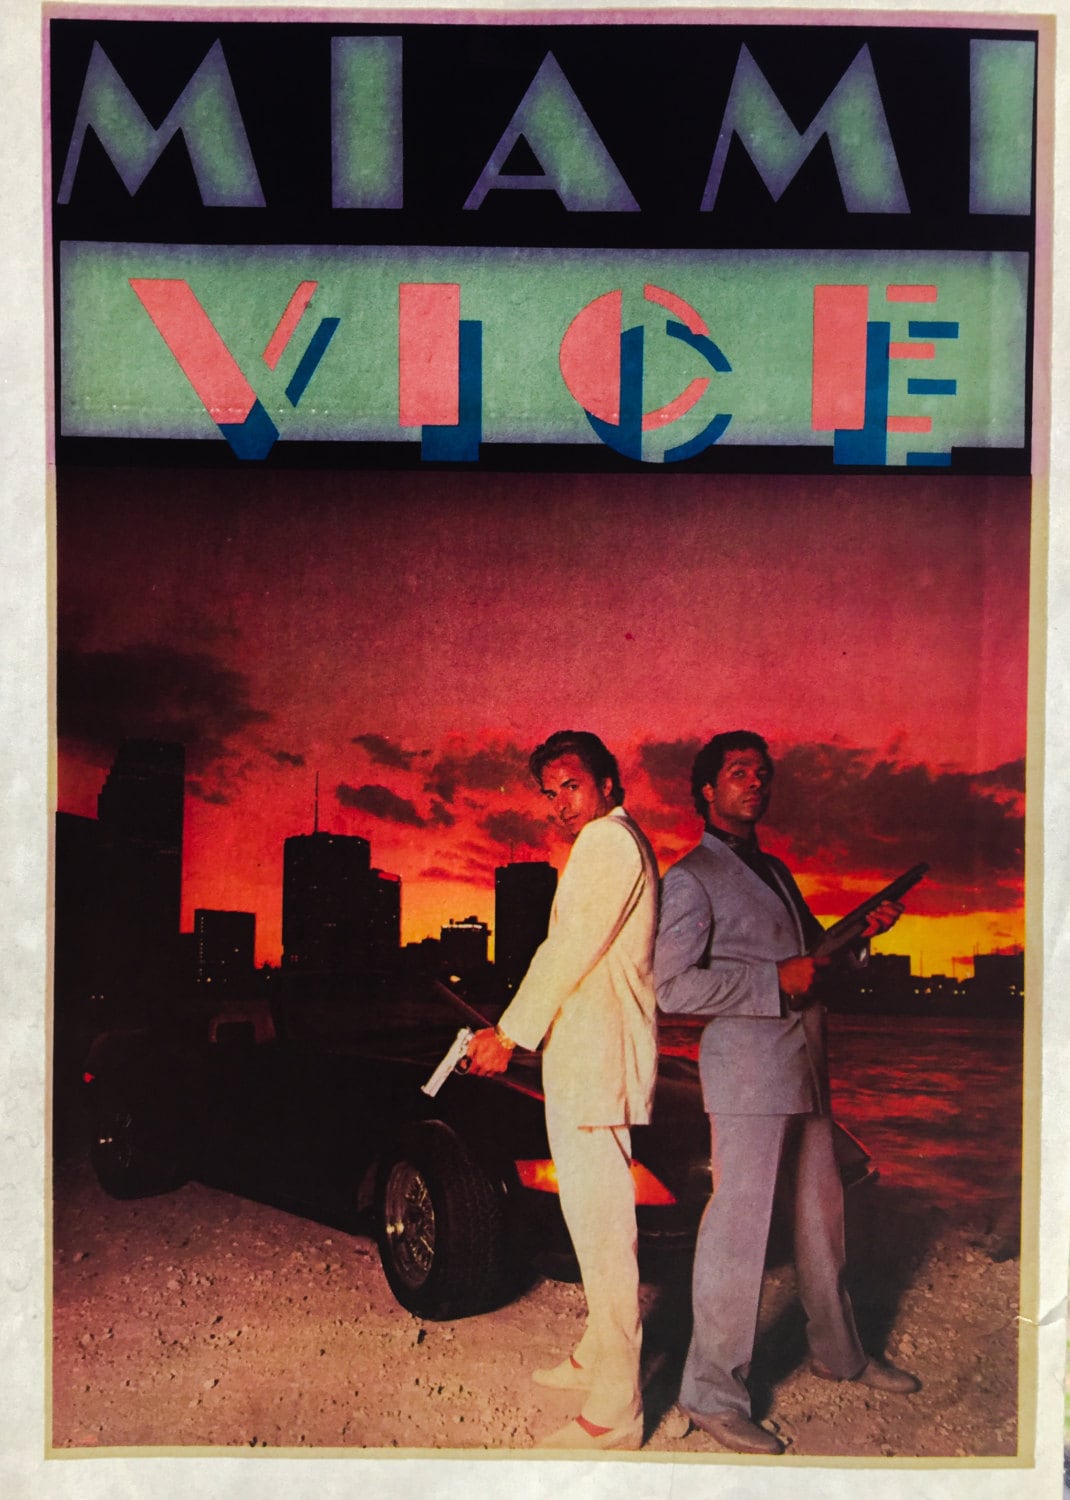 Miami Vice Vintage Iron On Heat Transfer